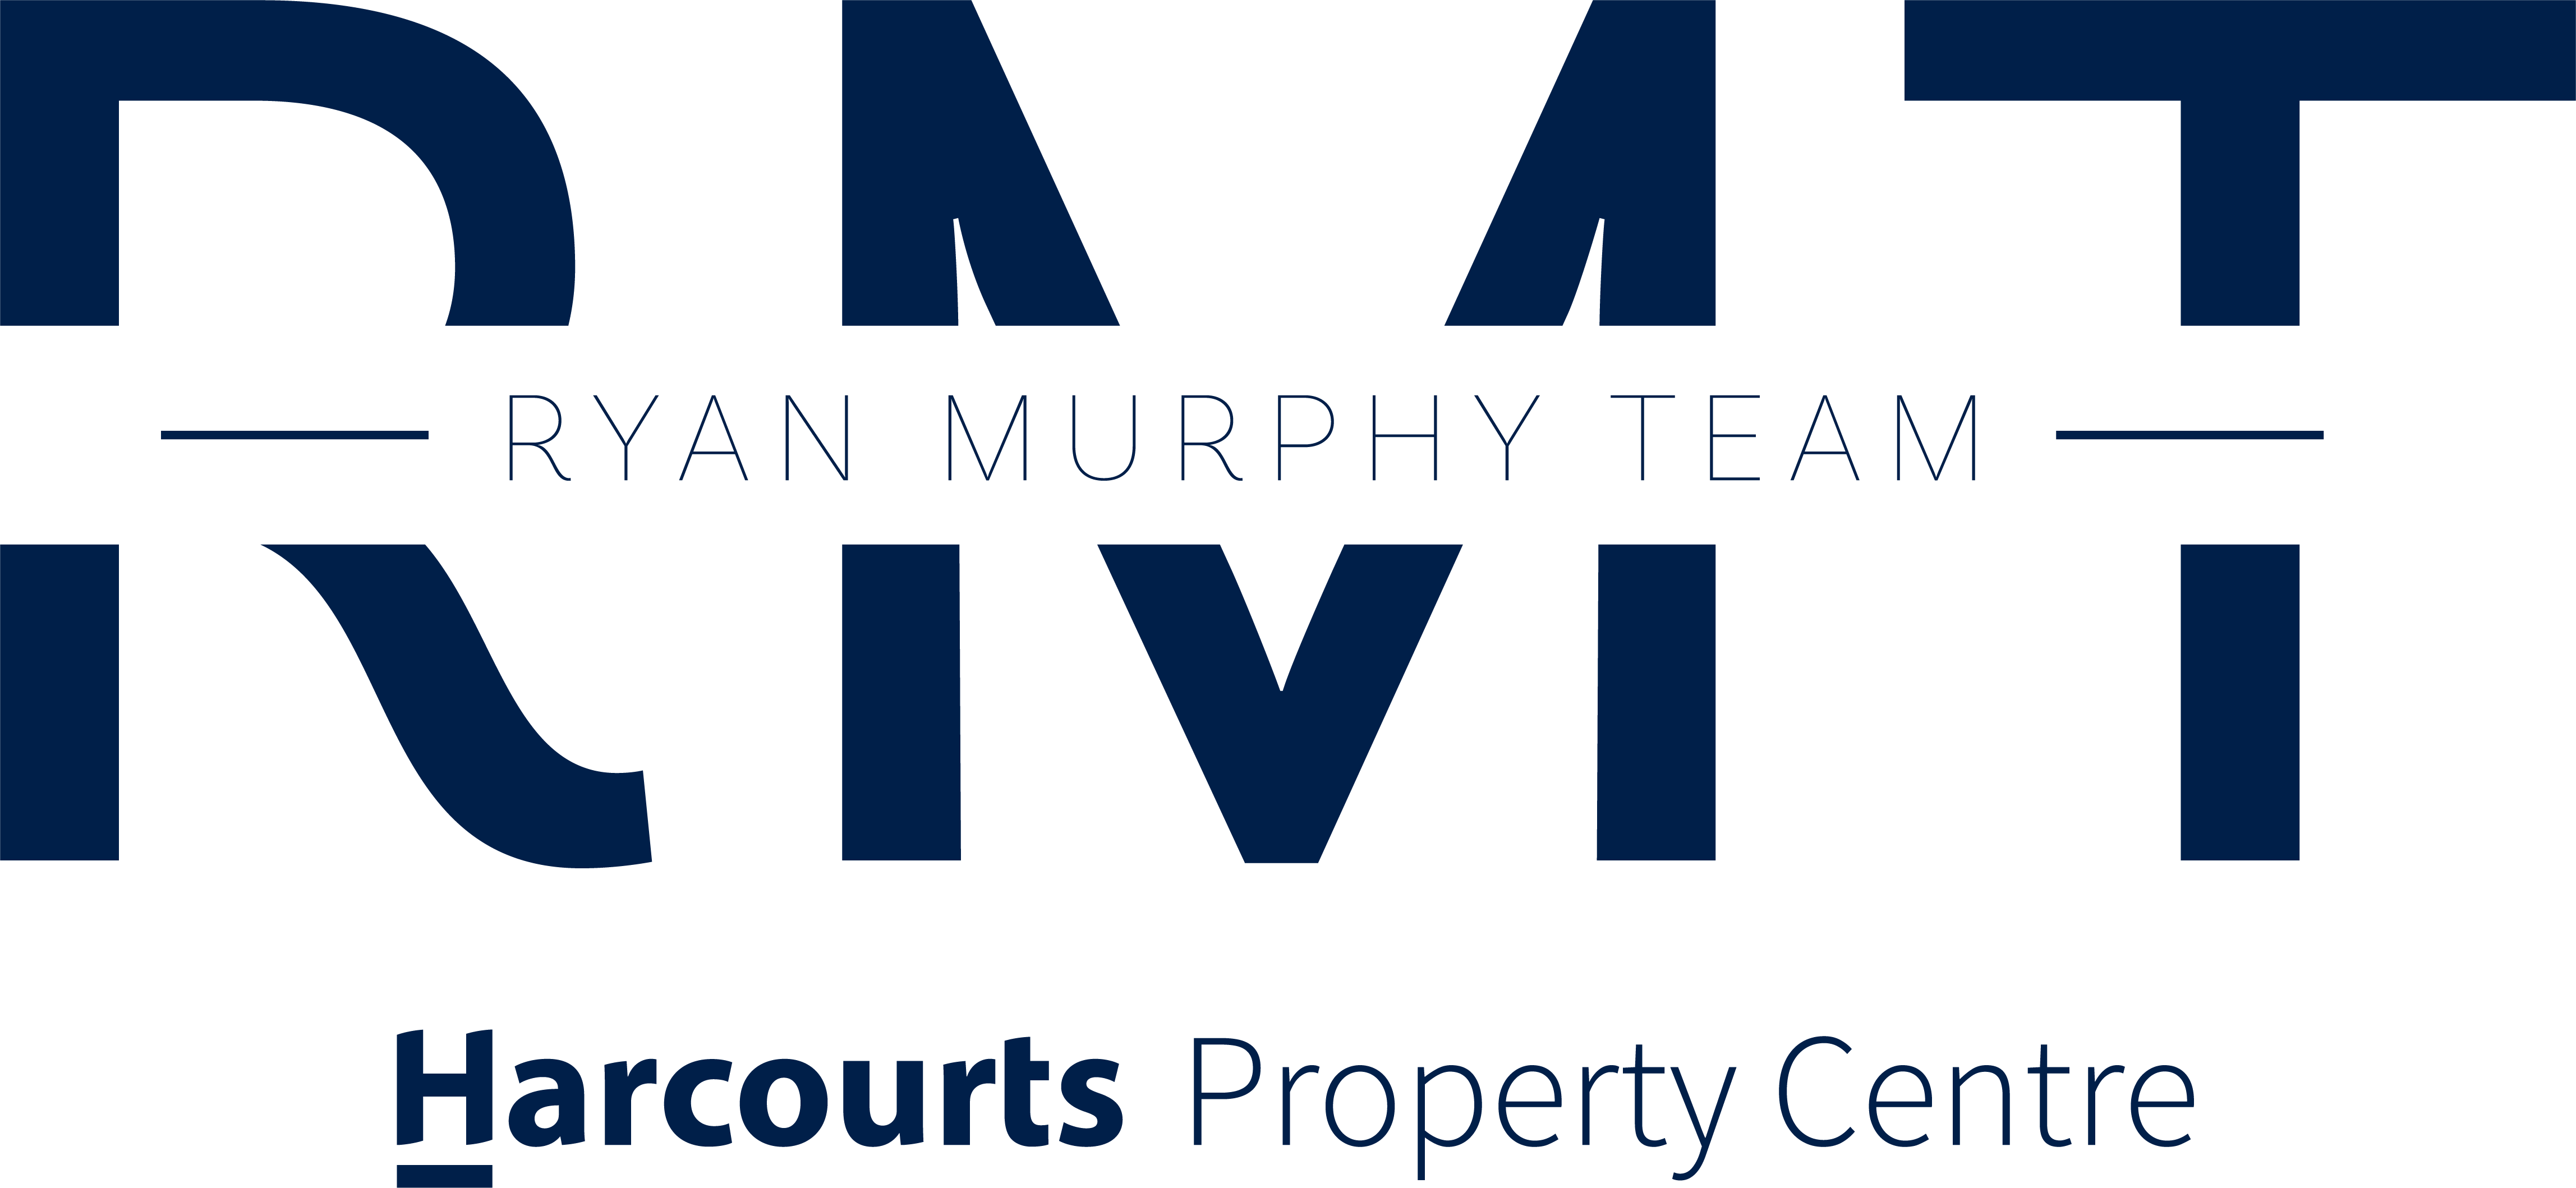 Ryan Murphy Team logo hpc_DK BLUE with HPC.png